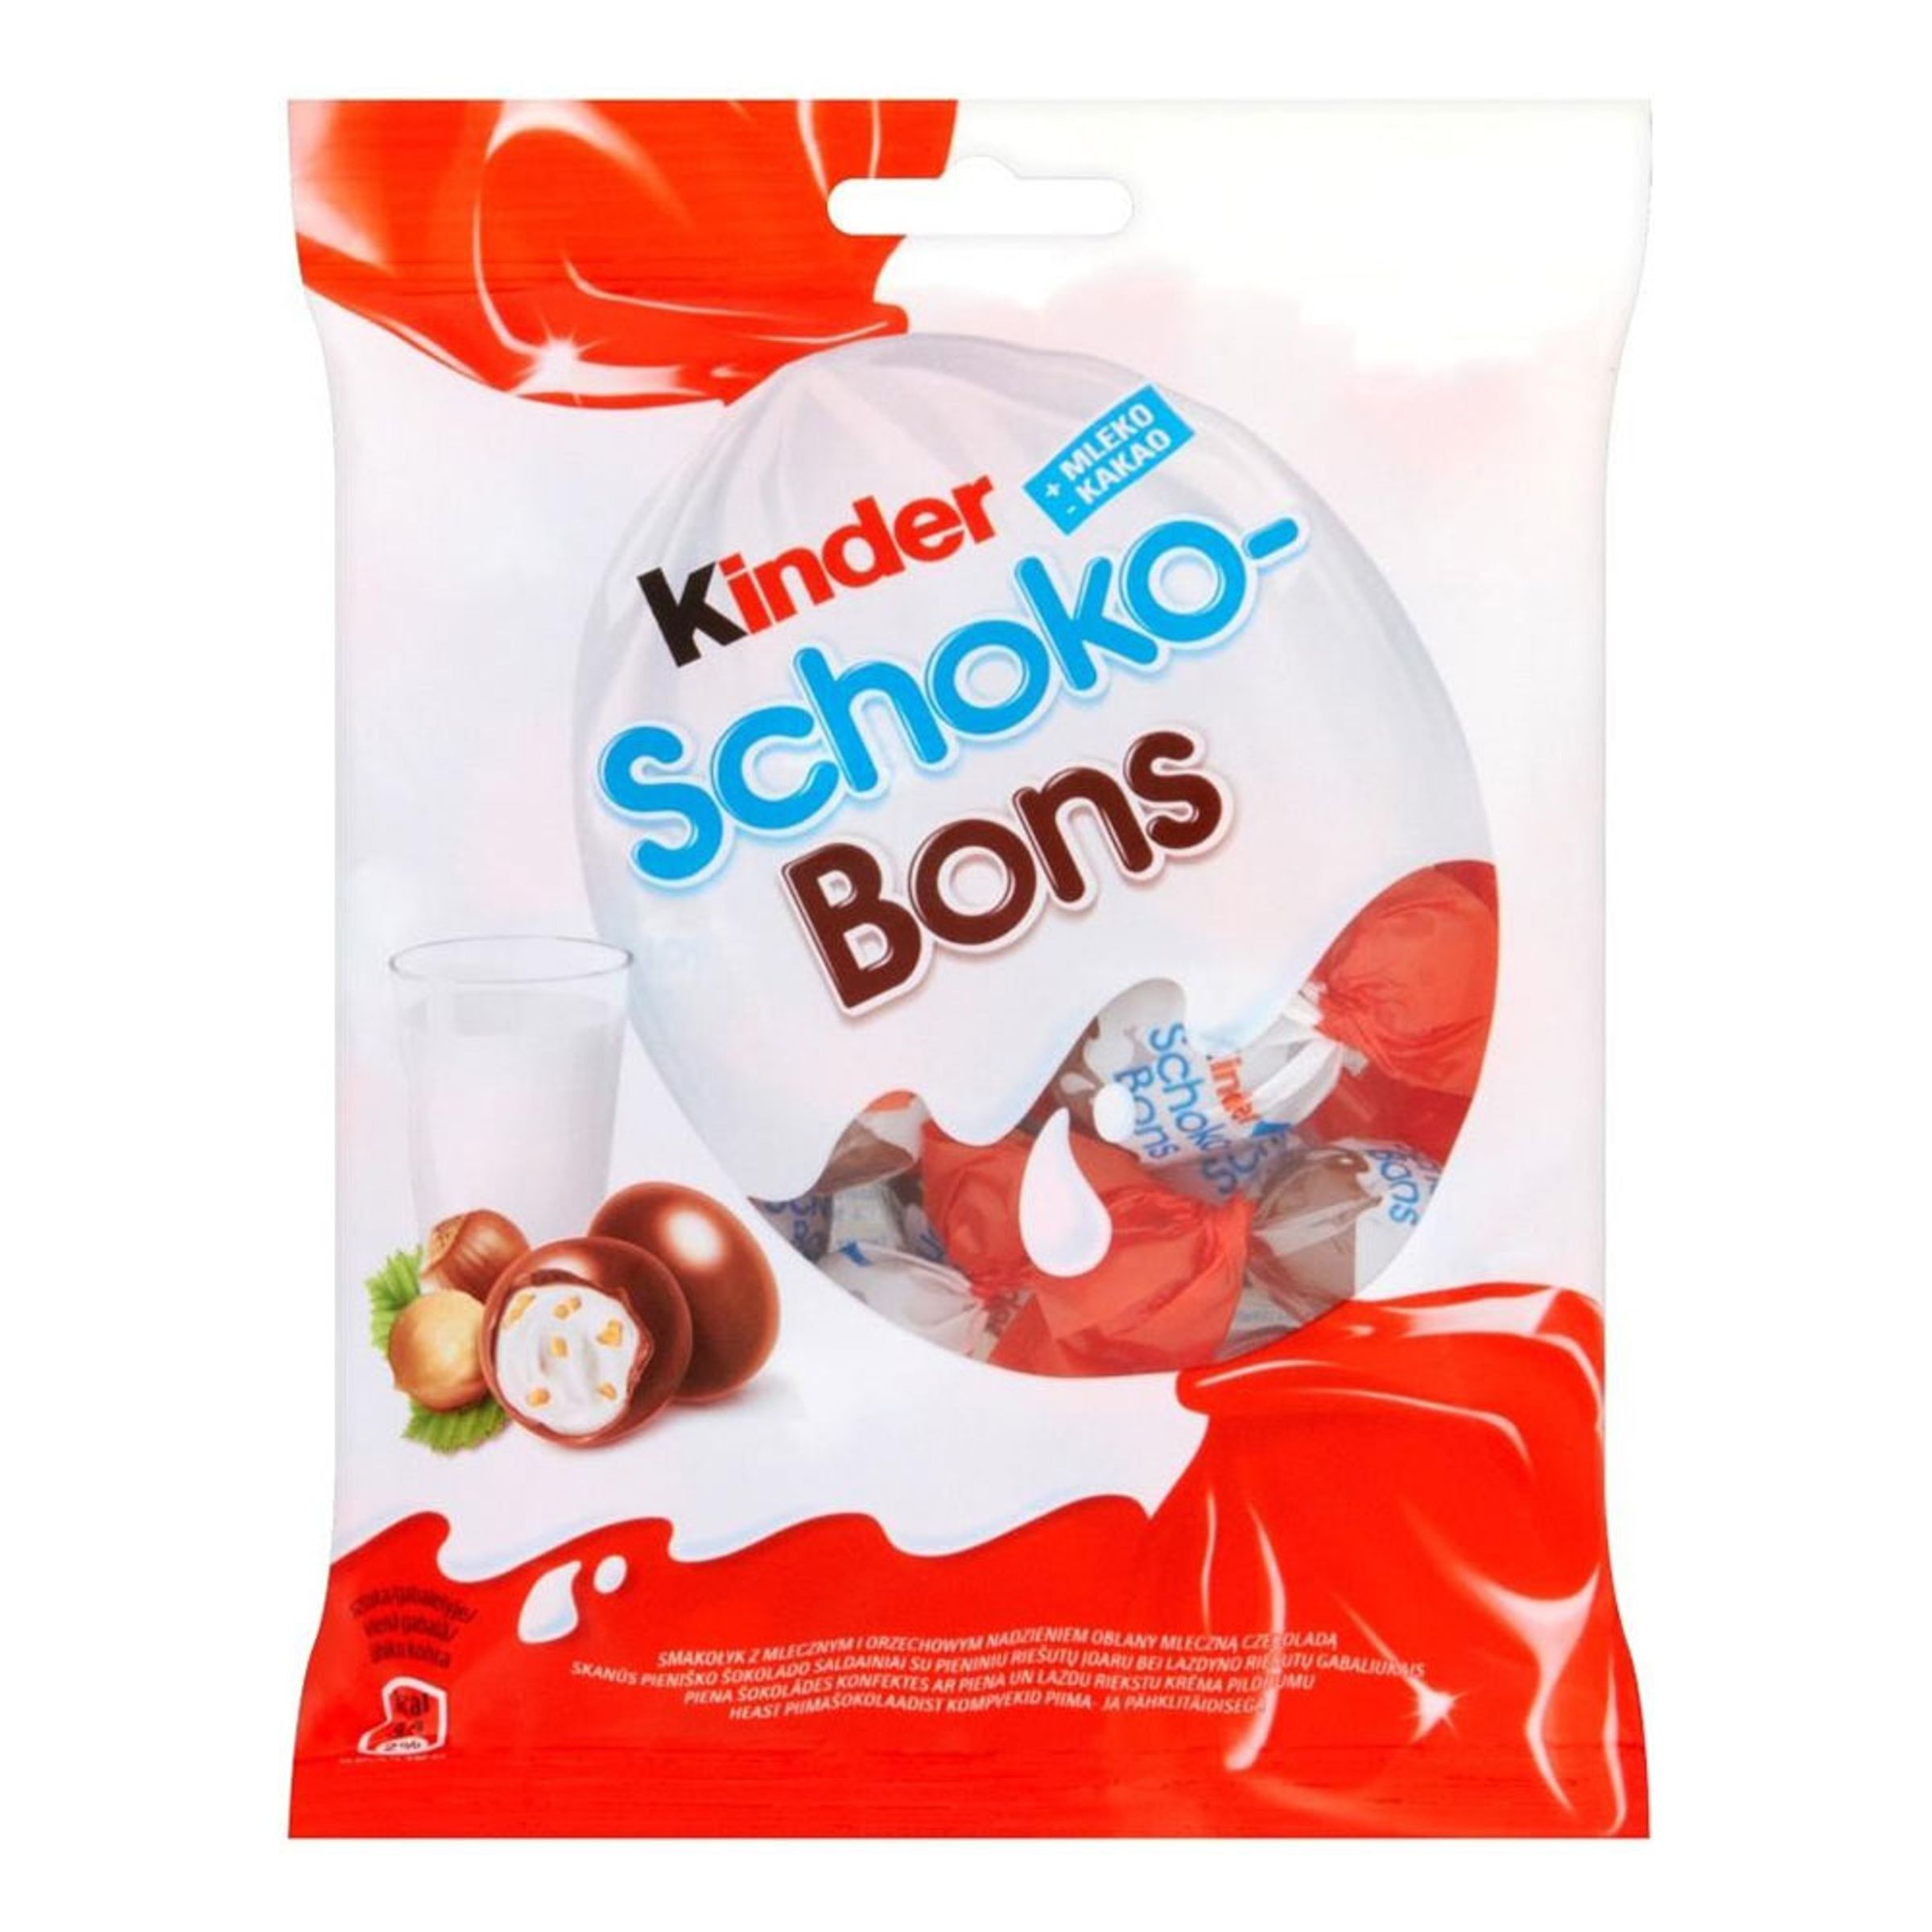 Kinder Schoko-Bons - 125 gram